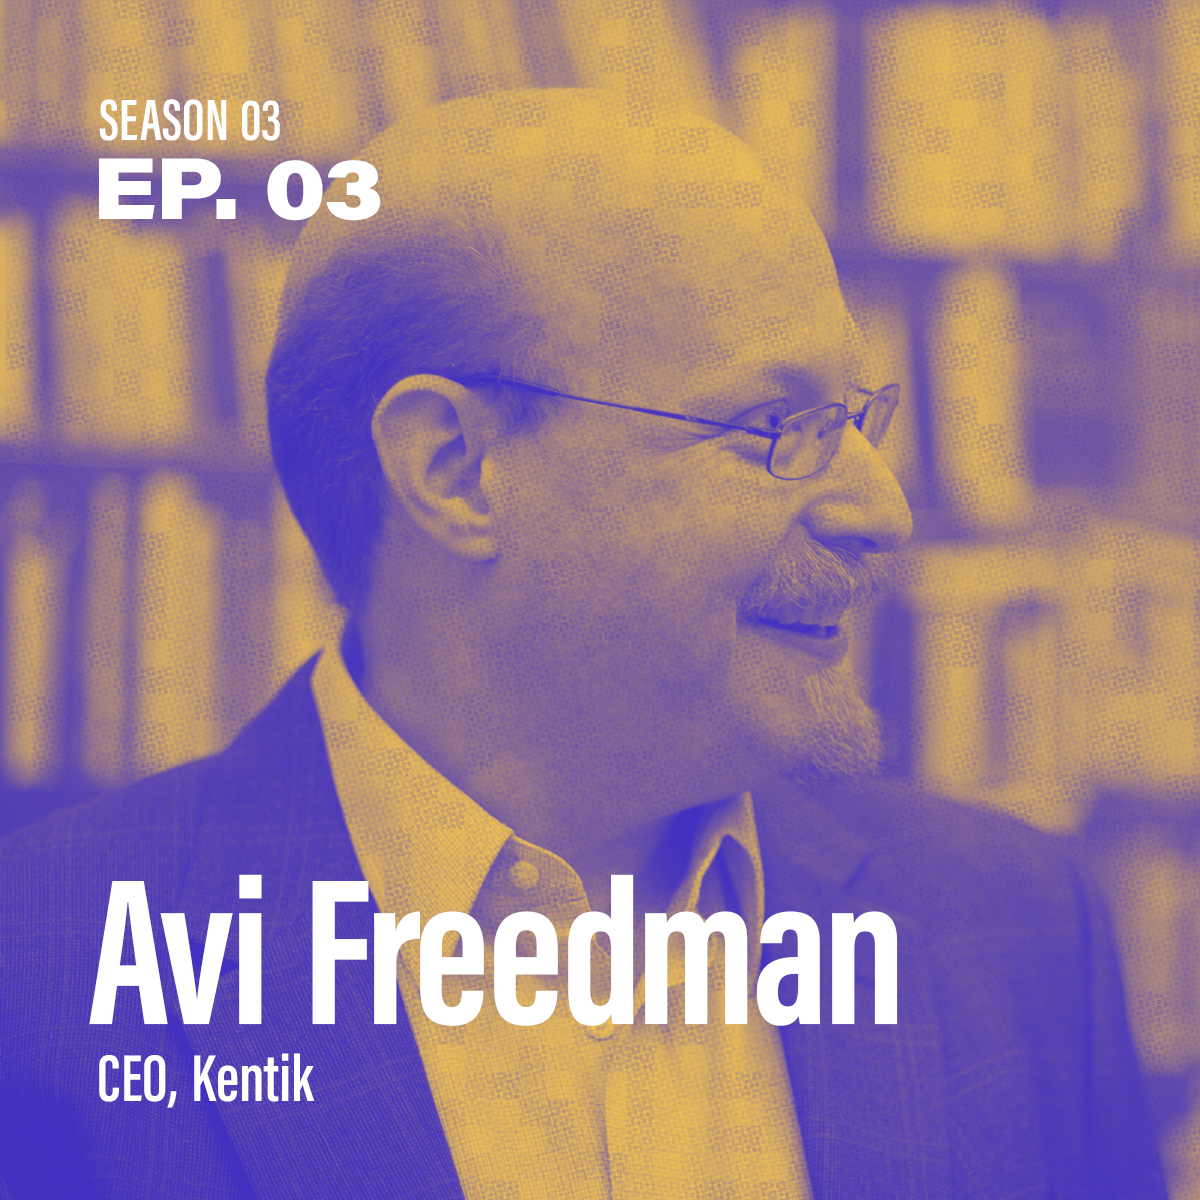 Season 3, Episode 3 - "Where's the source of truth?" with Avi Freedman, CEO, Kentik